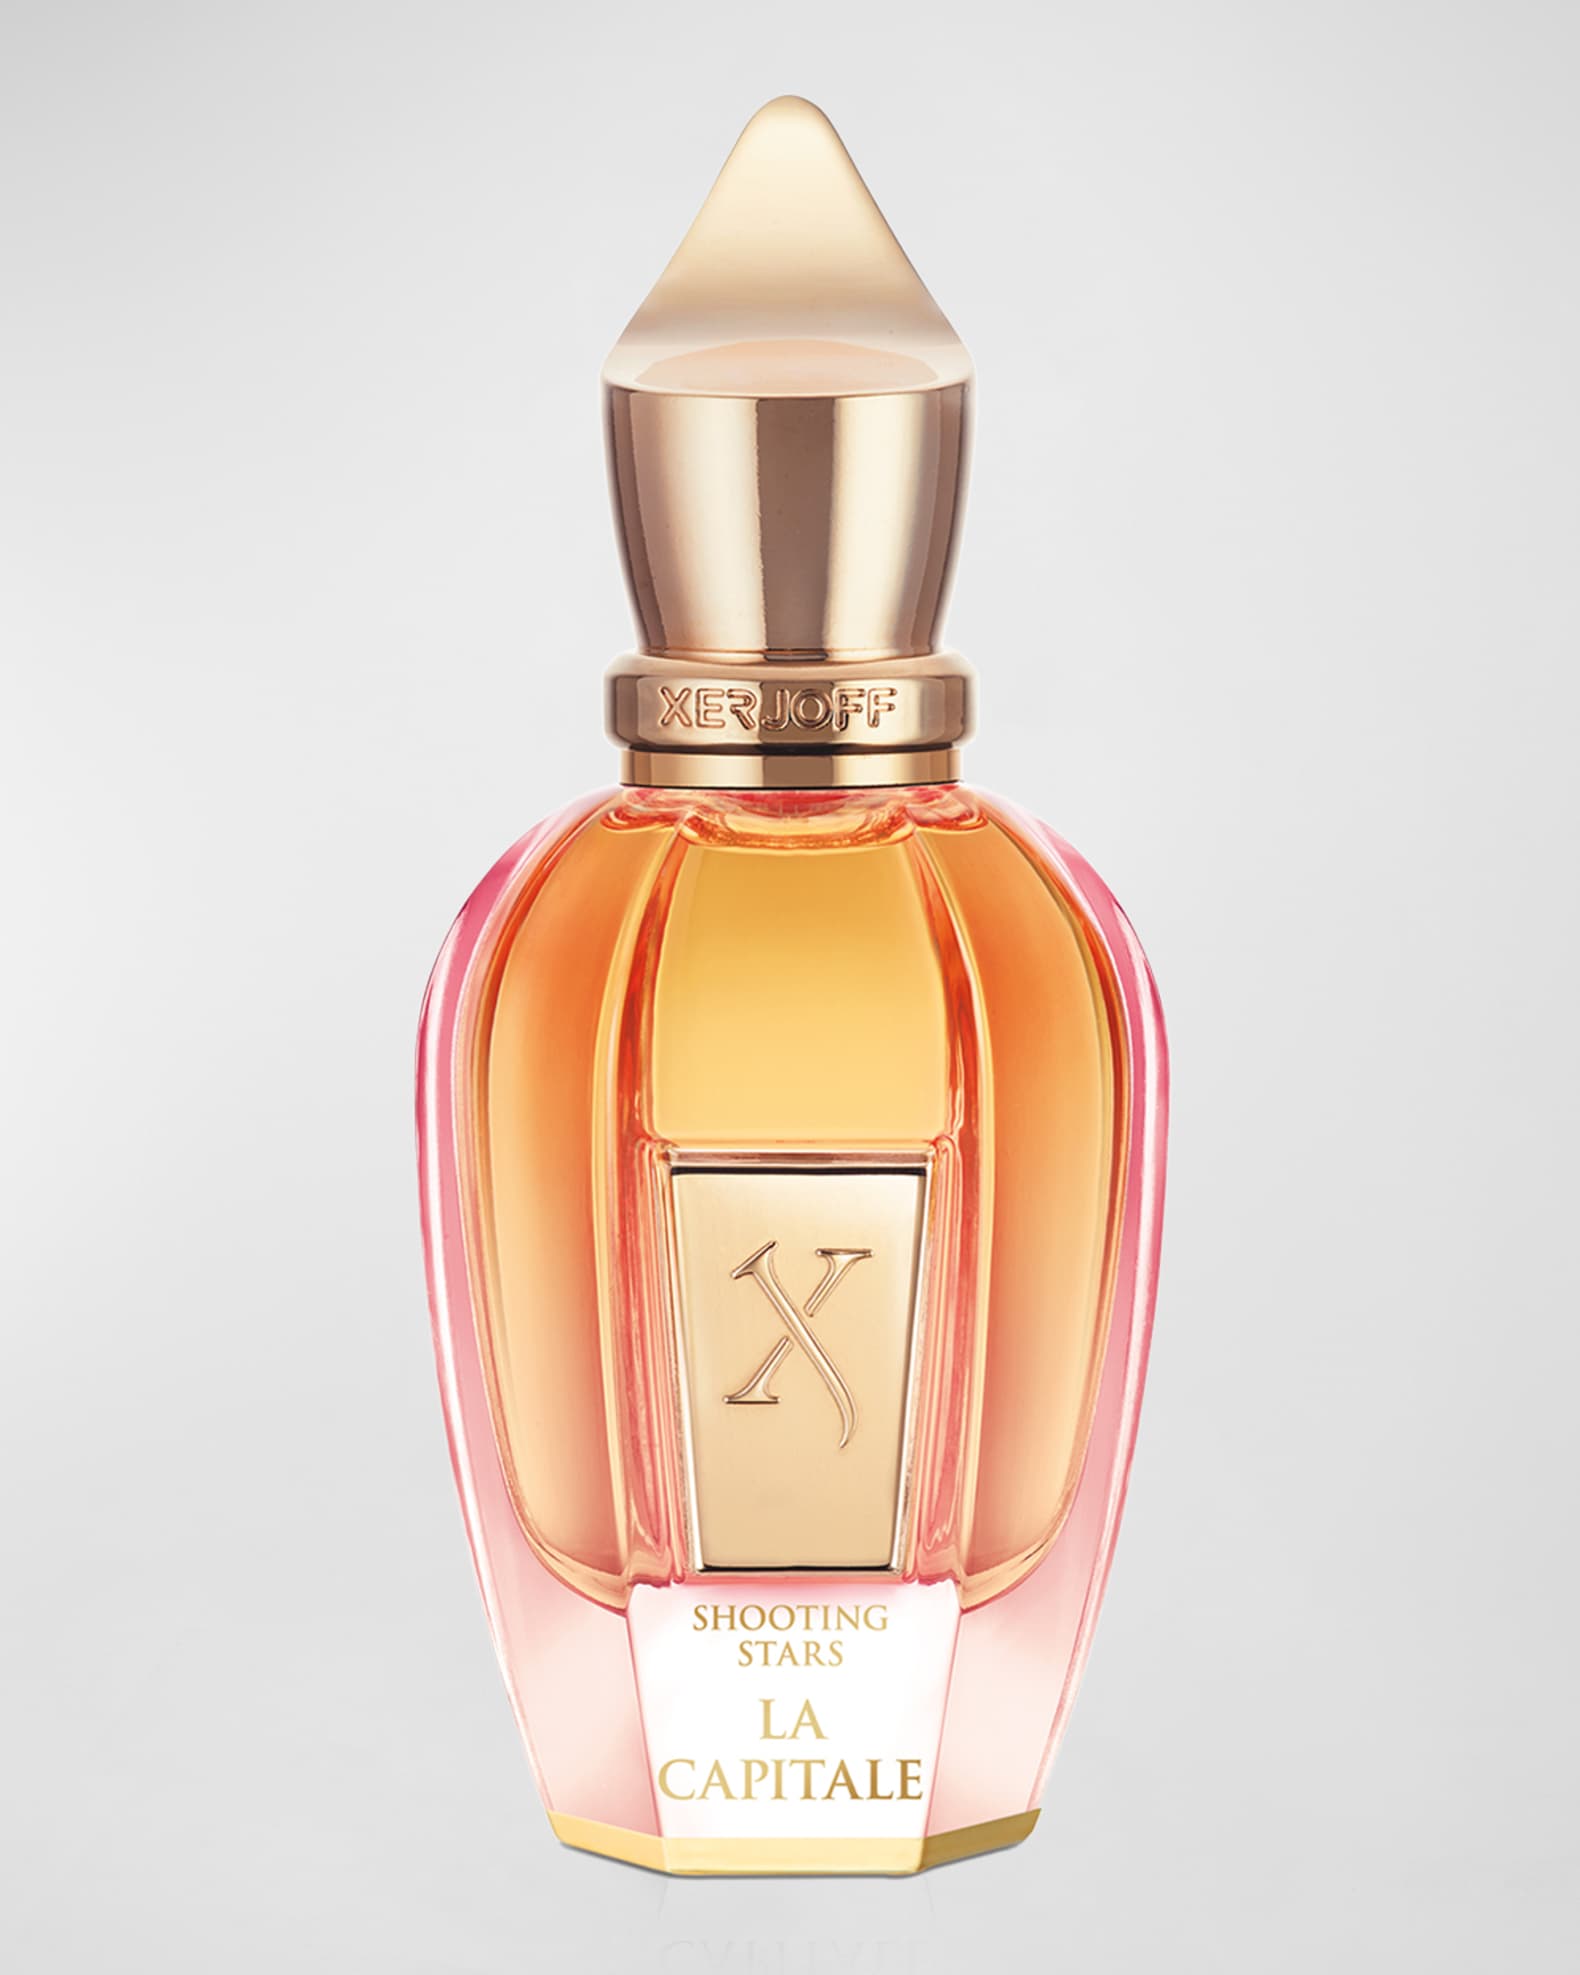 Louis Vuitton City of Stars Perfume, Eau de Parfum 3.4 oz/100 ml Spray.